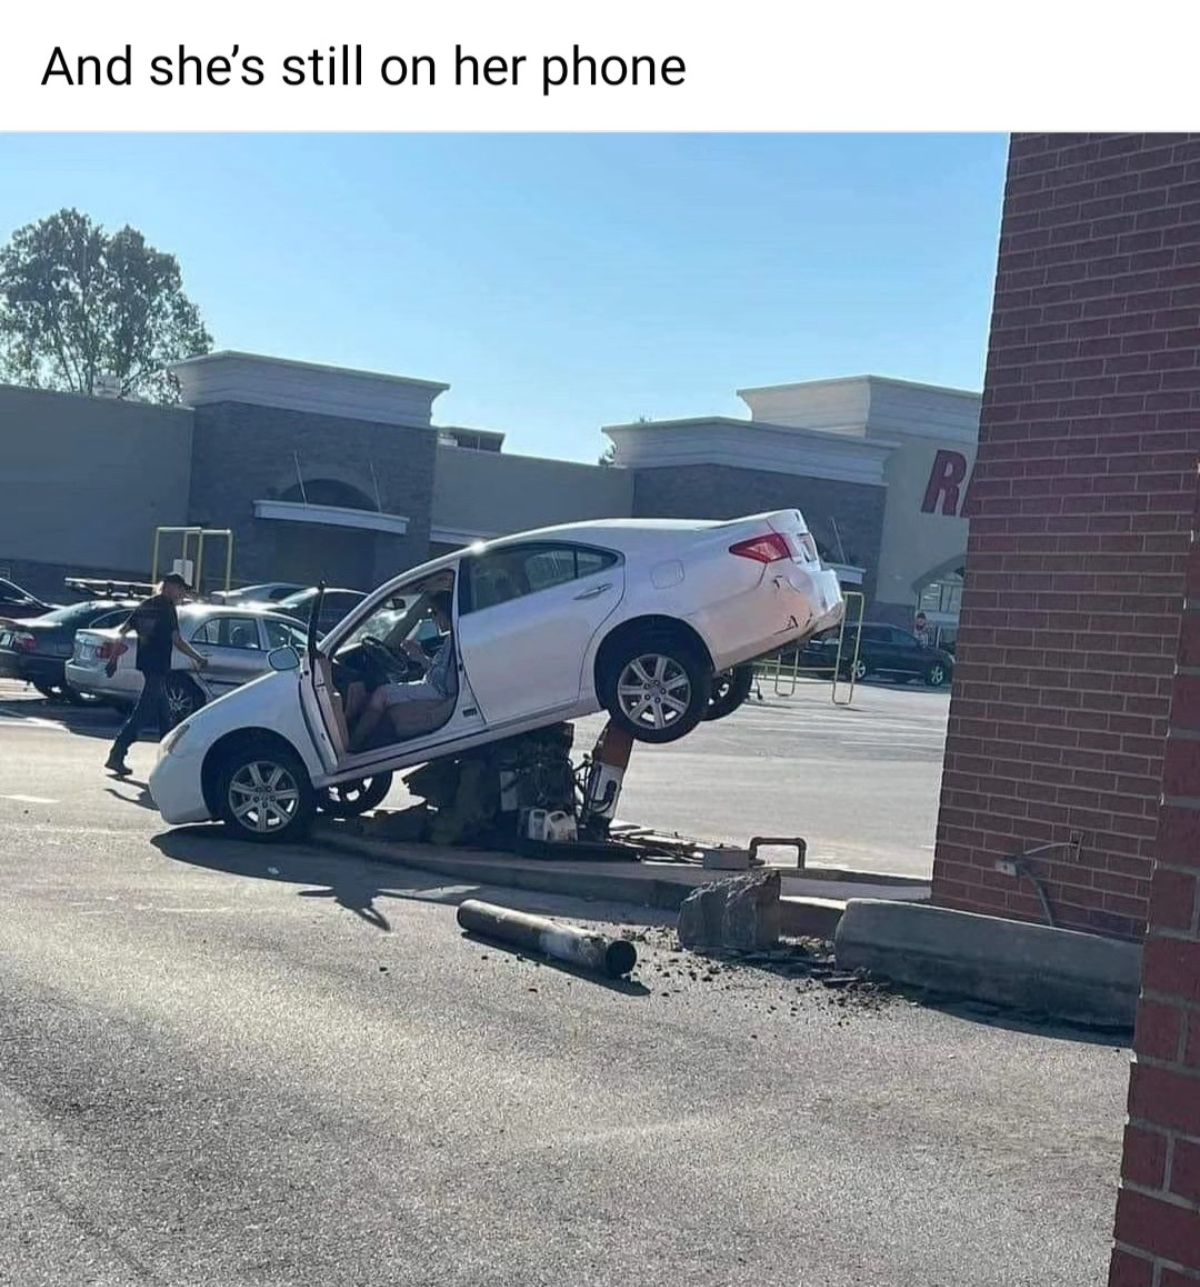 asphalt - And she's still on her phone R